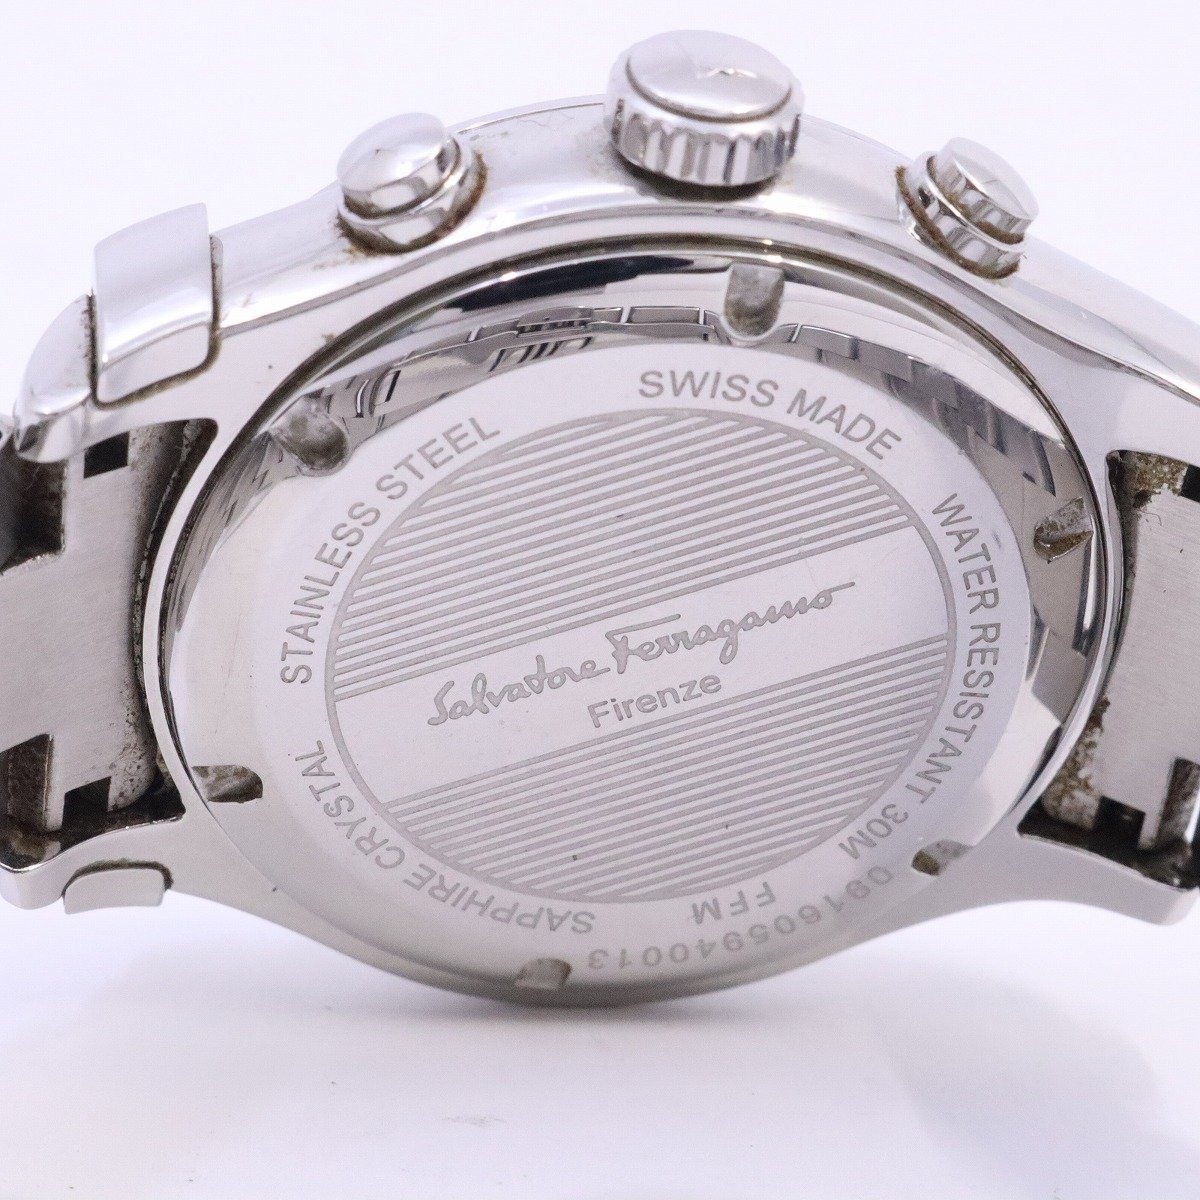 [ goods with special circumstances ] Ferragamo chronograph quartz men's wristwatch black face original SS belt FFM[... pawnshop ]